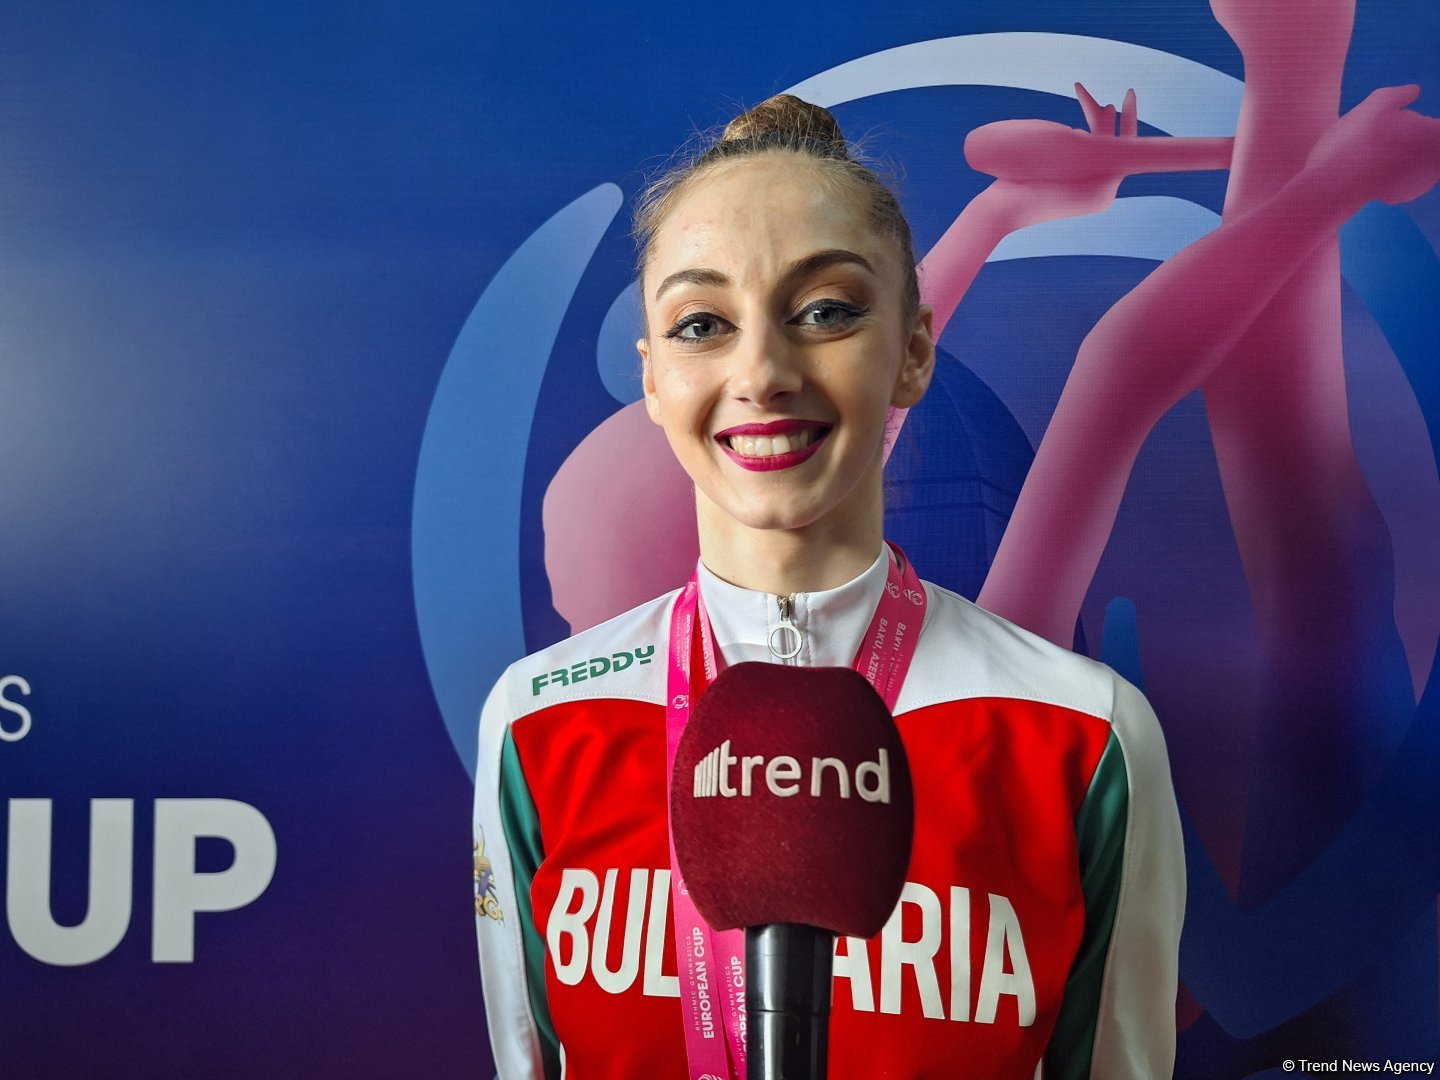 Azerbaijan organizes gymnastics competitions very well - Bulgarian gymnast